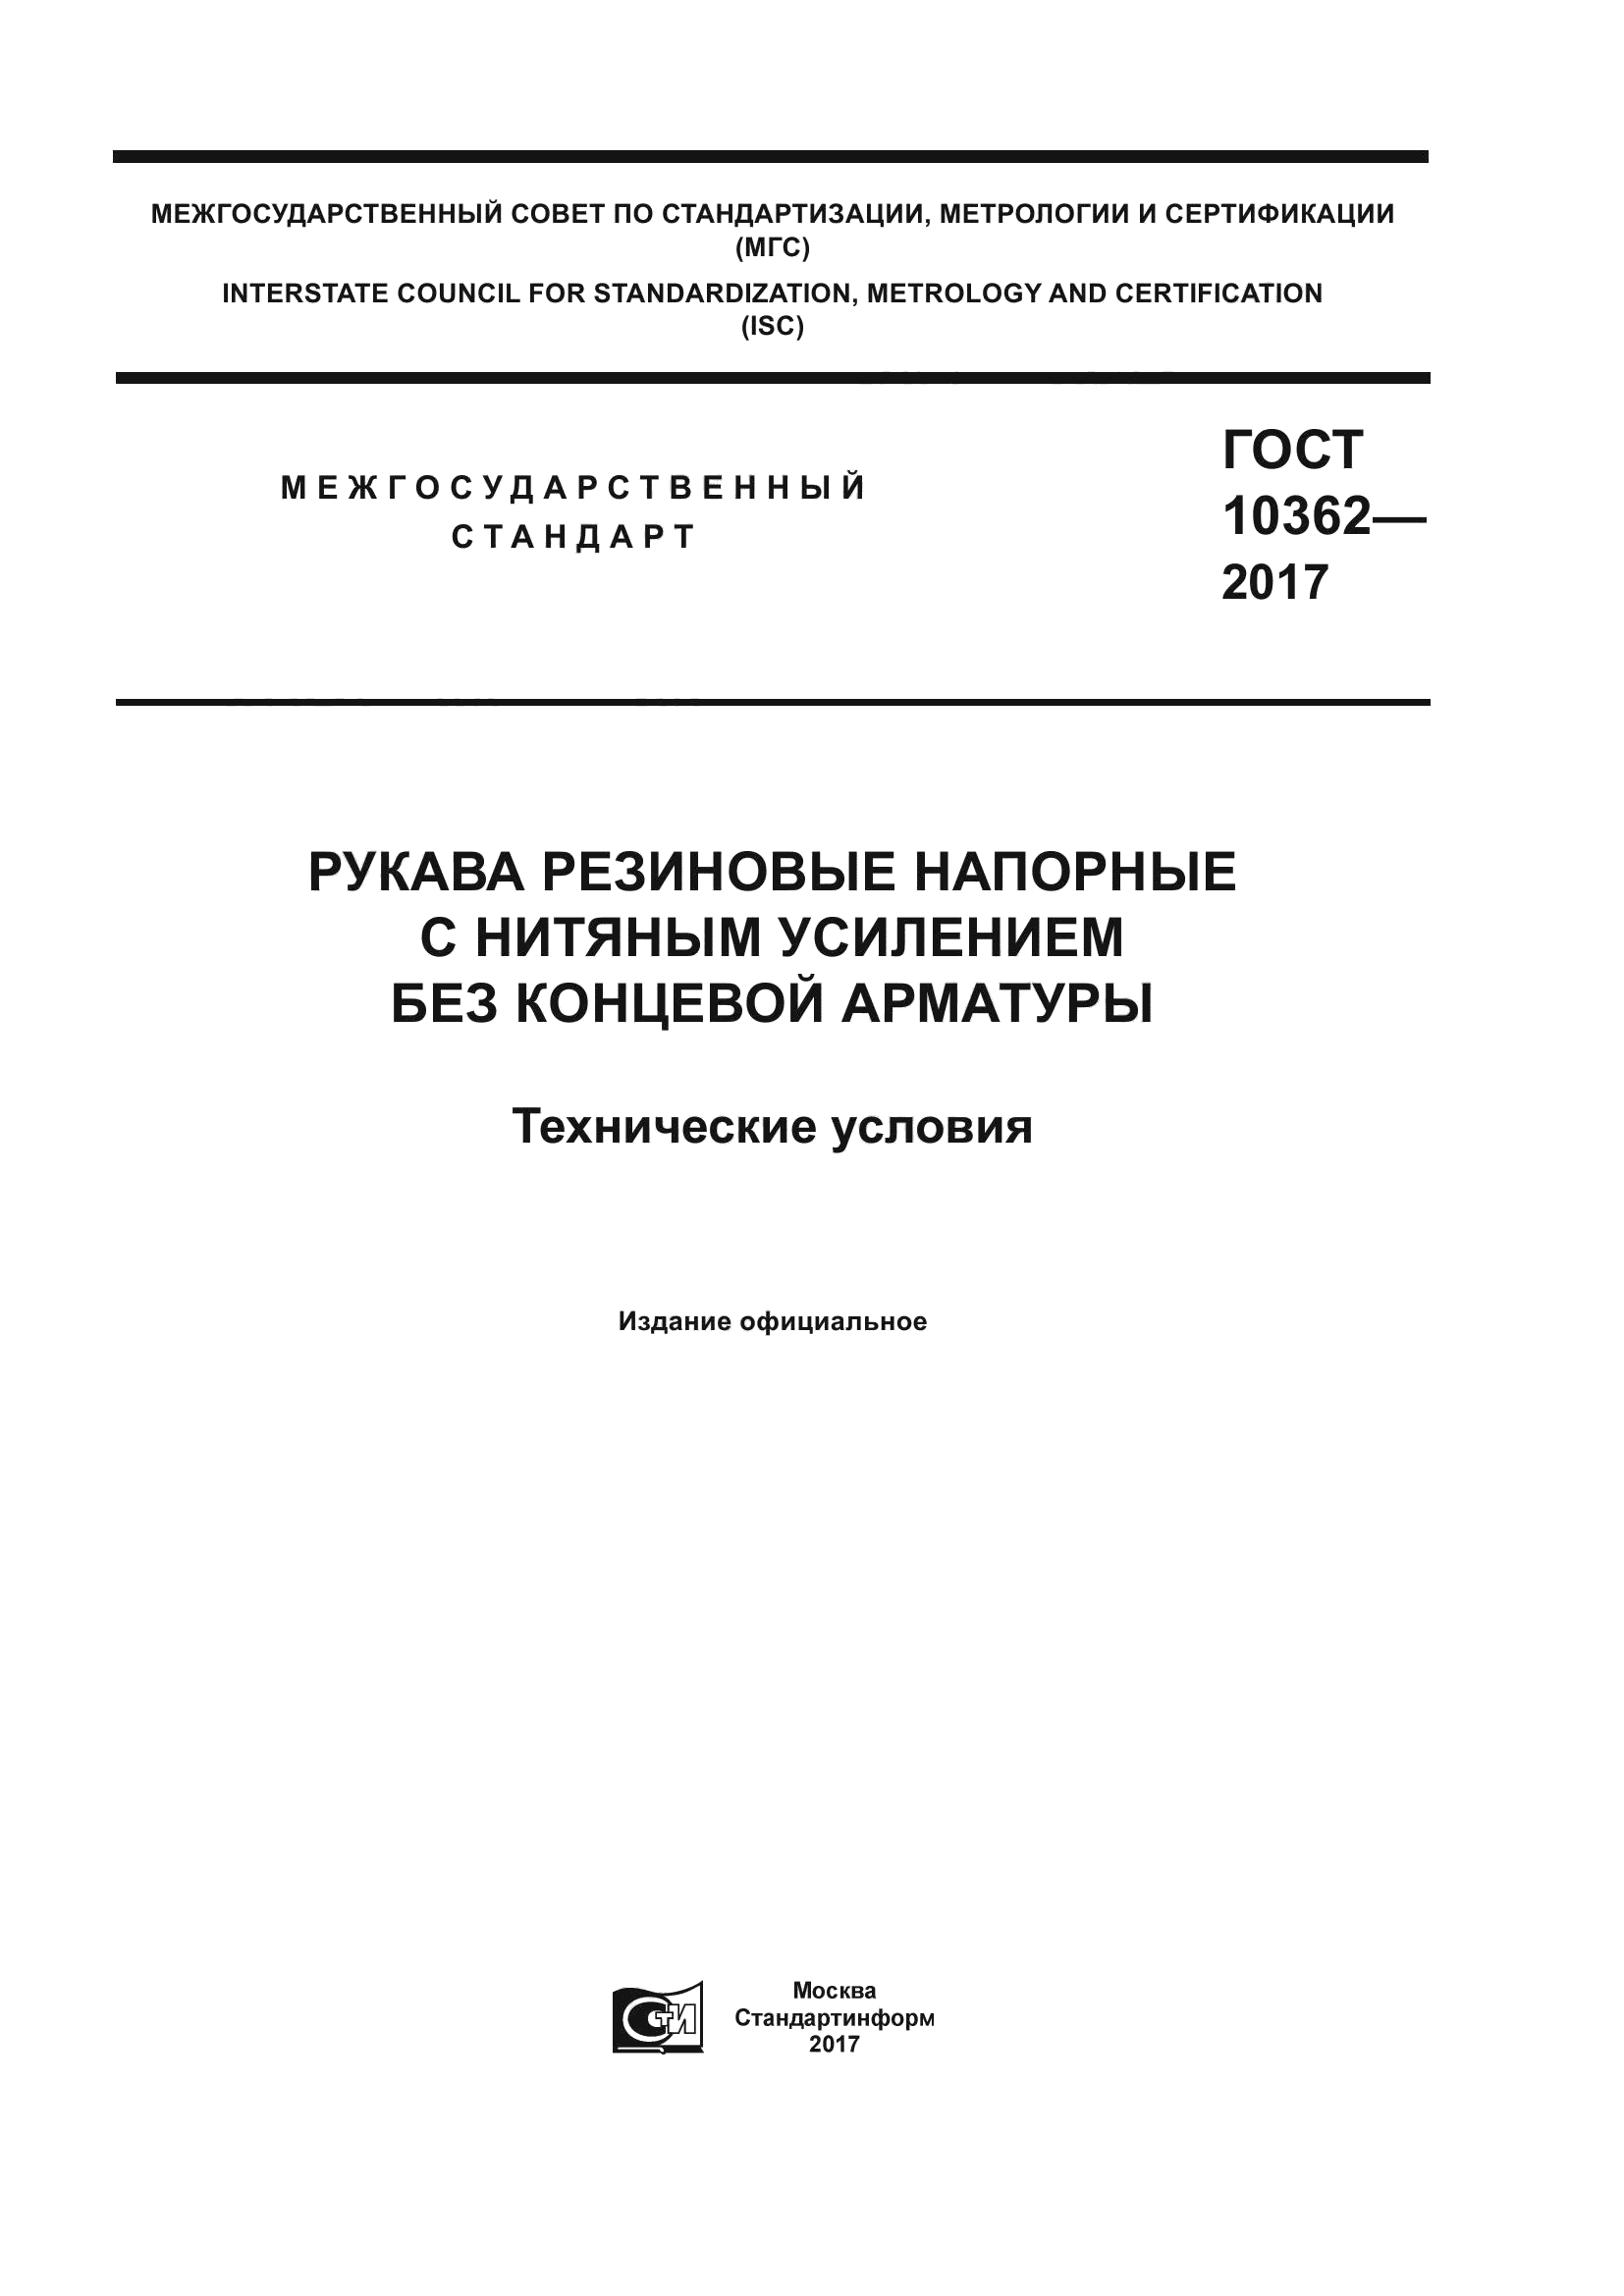 ГОСТ 10362-2017